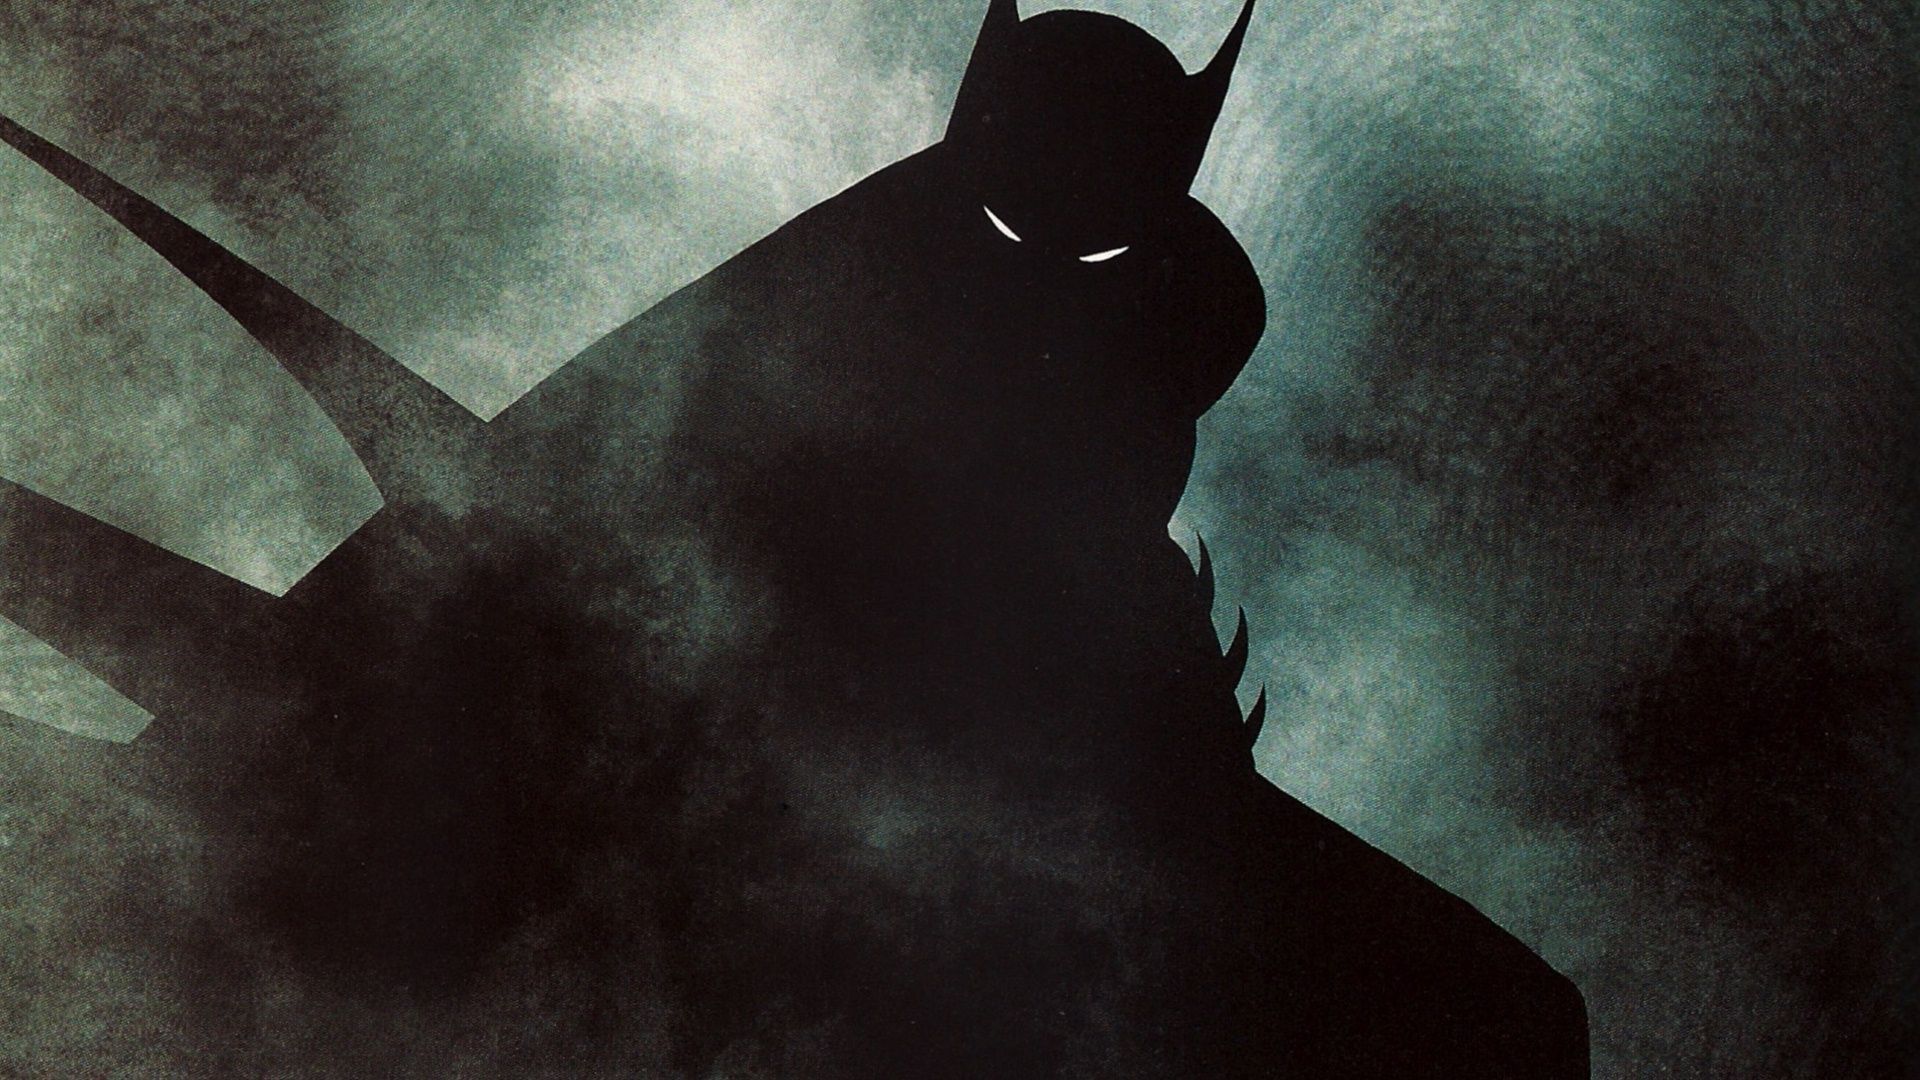 Batman sign Wallpaper 4K, Black background, DC Superheroes